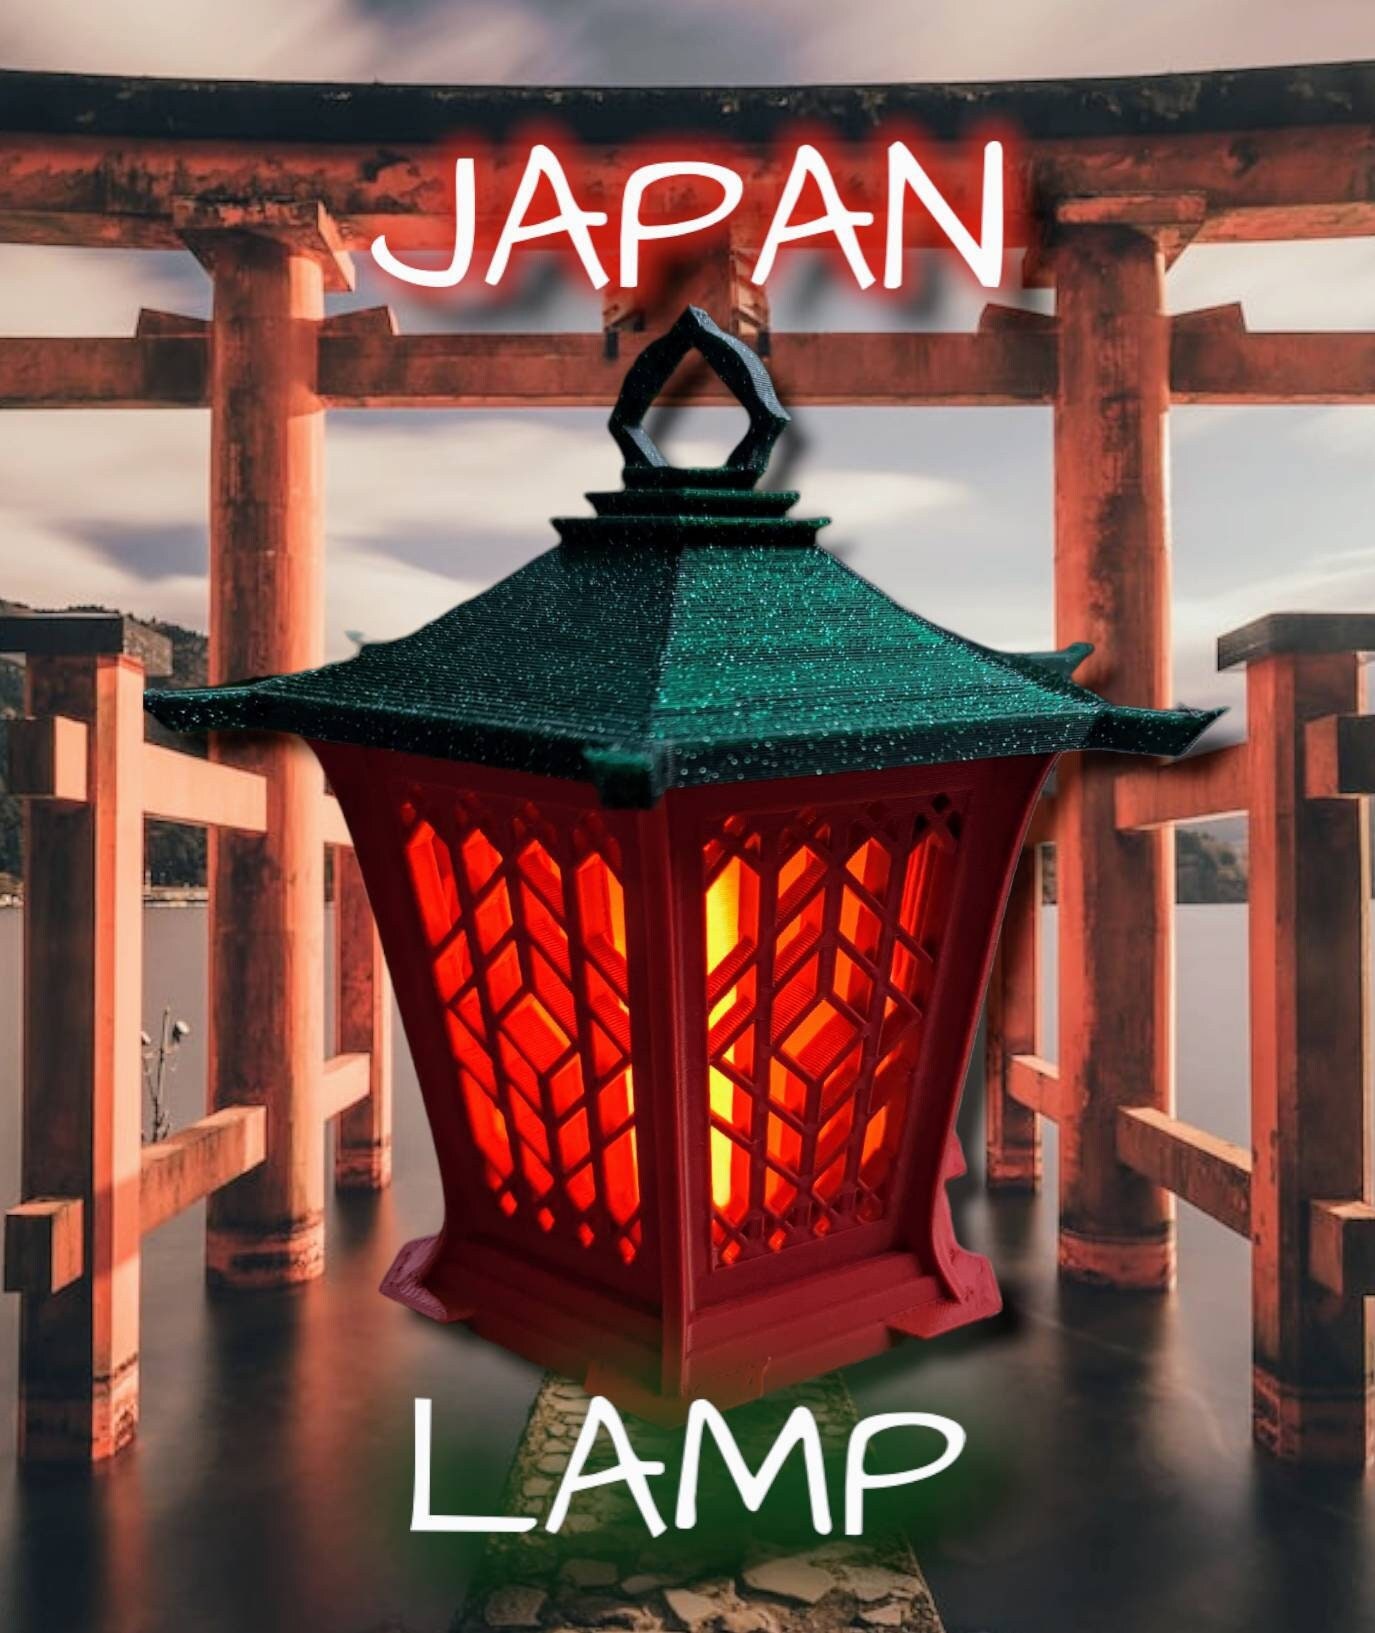 Cool led lamp - .de